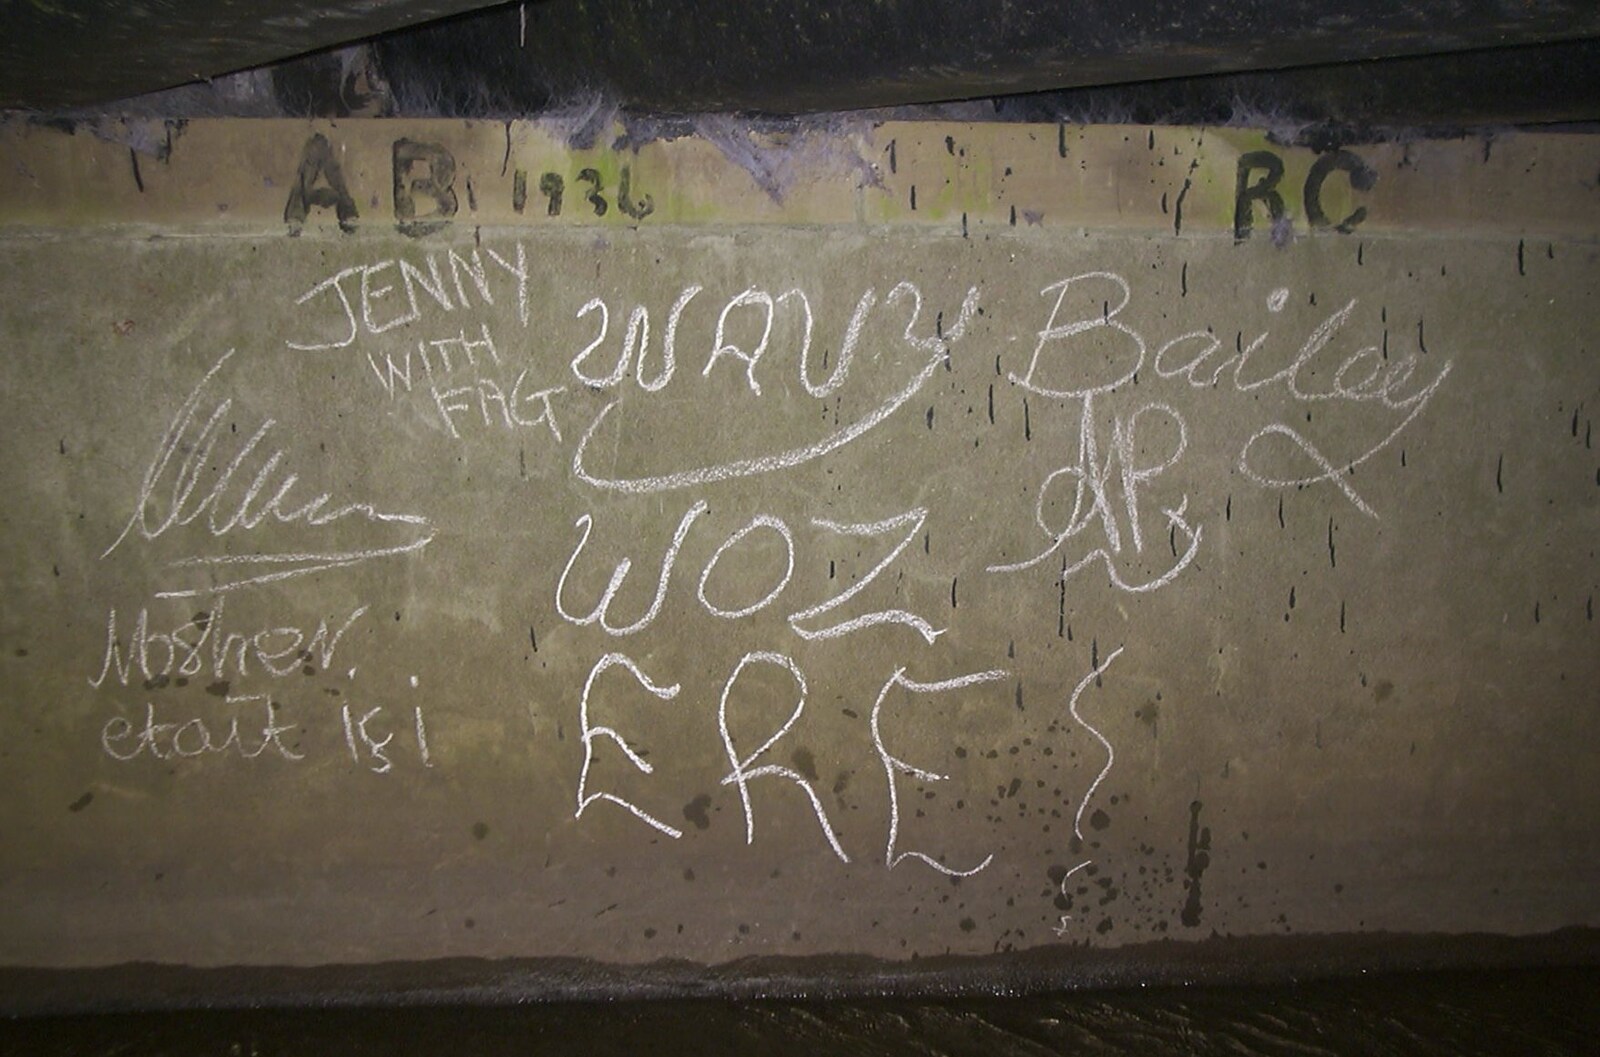 We leave some chalk graffiti behind from Carolyn on Sunday, Wymondham, Norfolk - 23rd March 2003